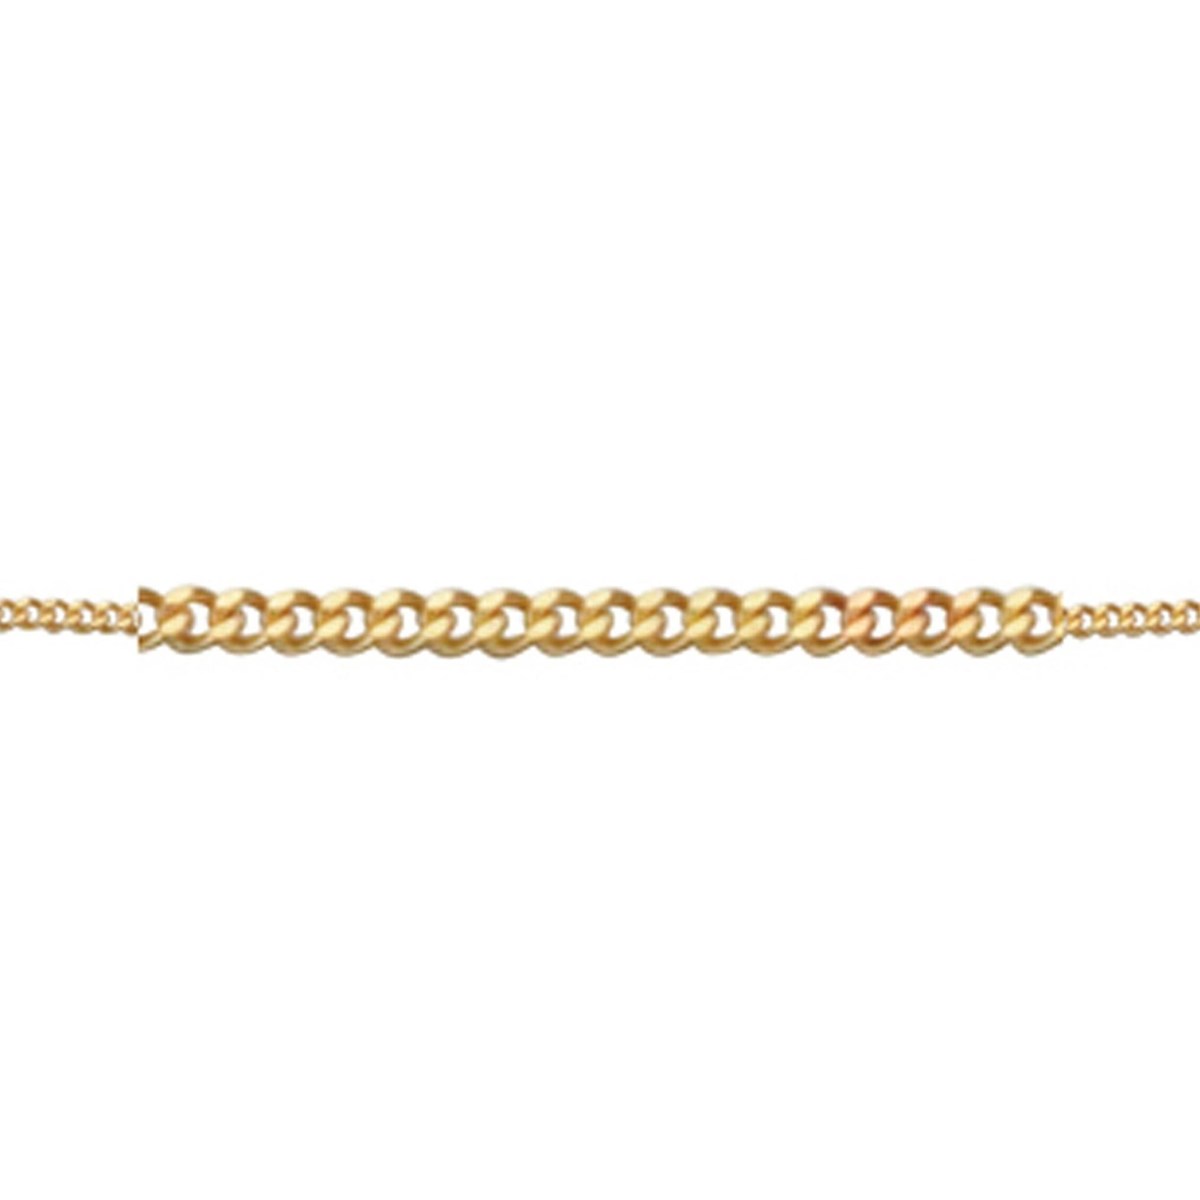 Collier perle - diamant -  Chaine en Or 375 de 41cm - Pendentif en Or 375/1000 - vue 2